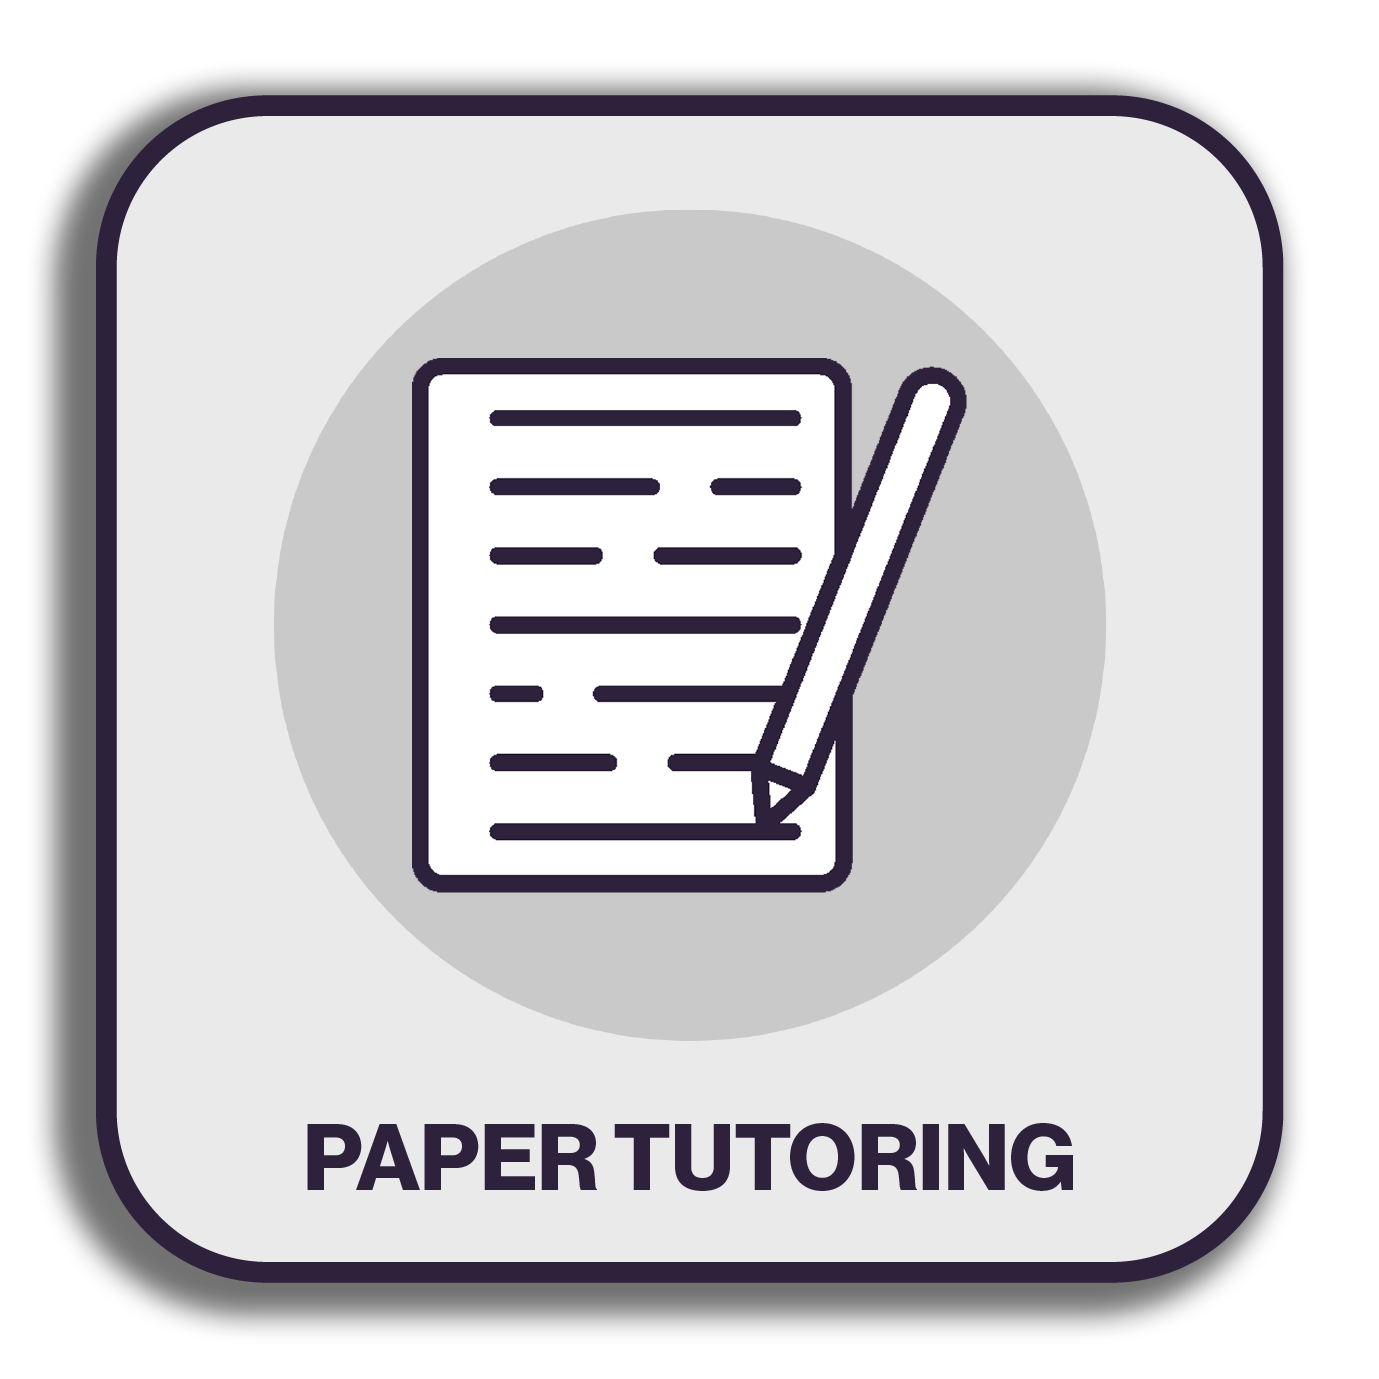 Paper tutoring icon